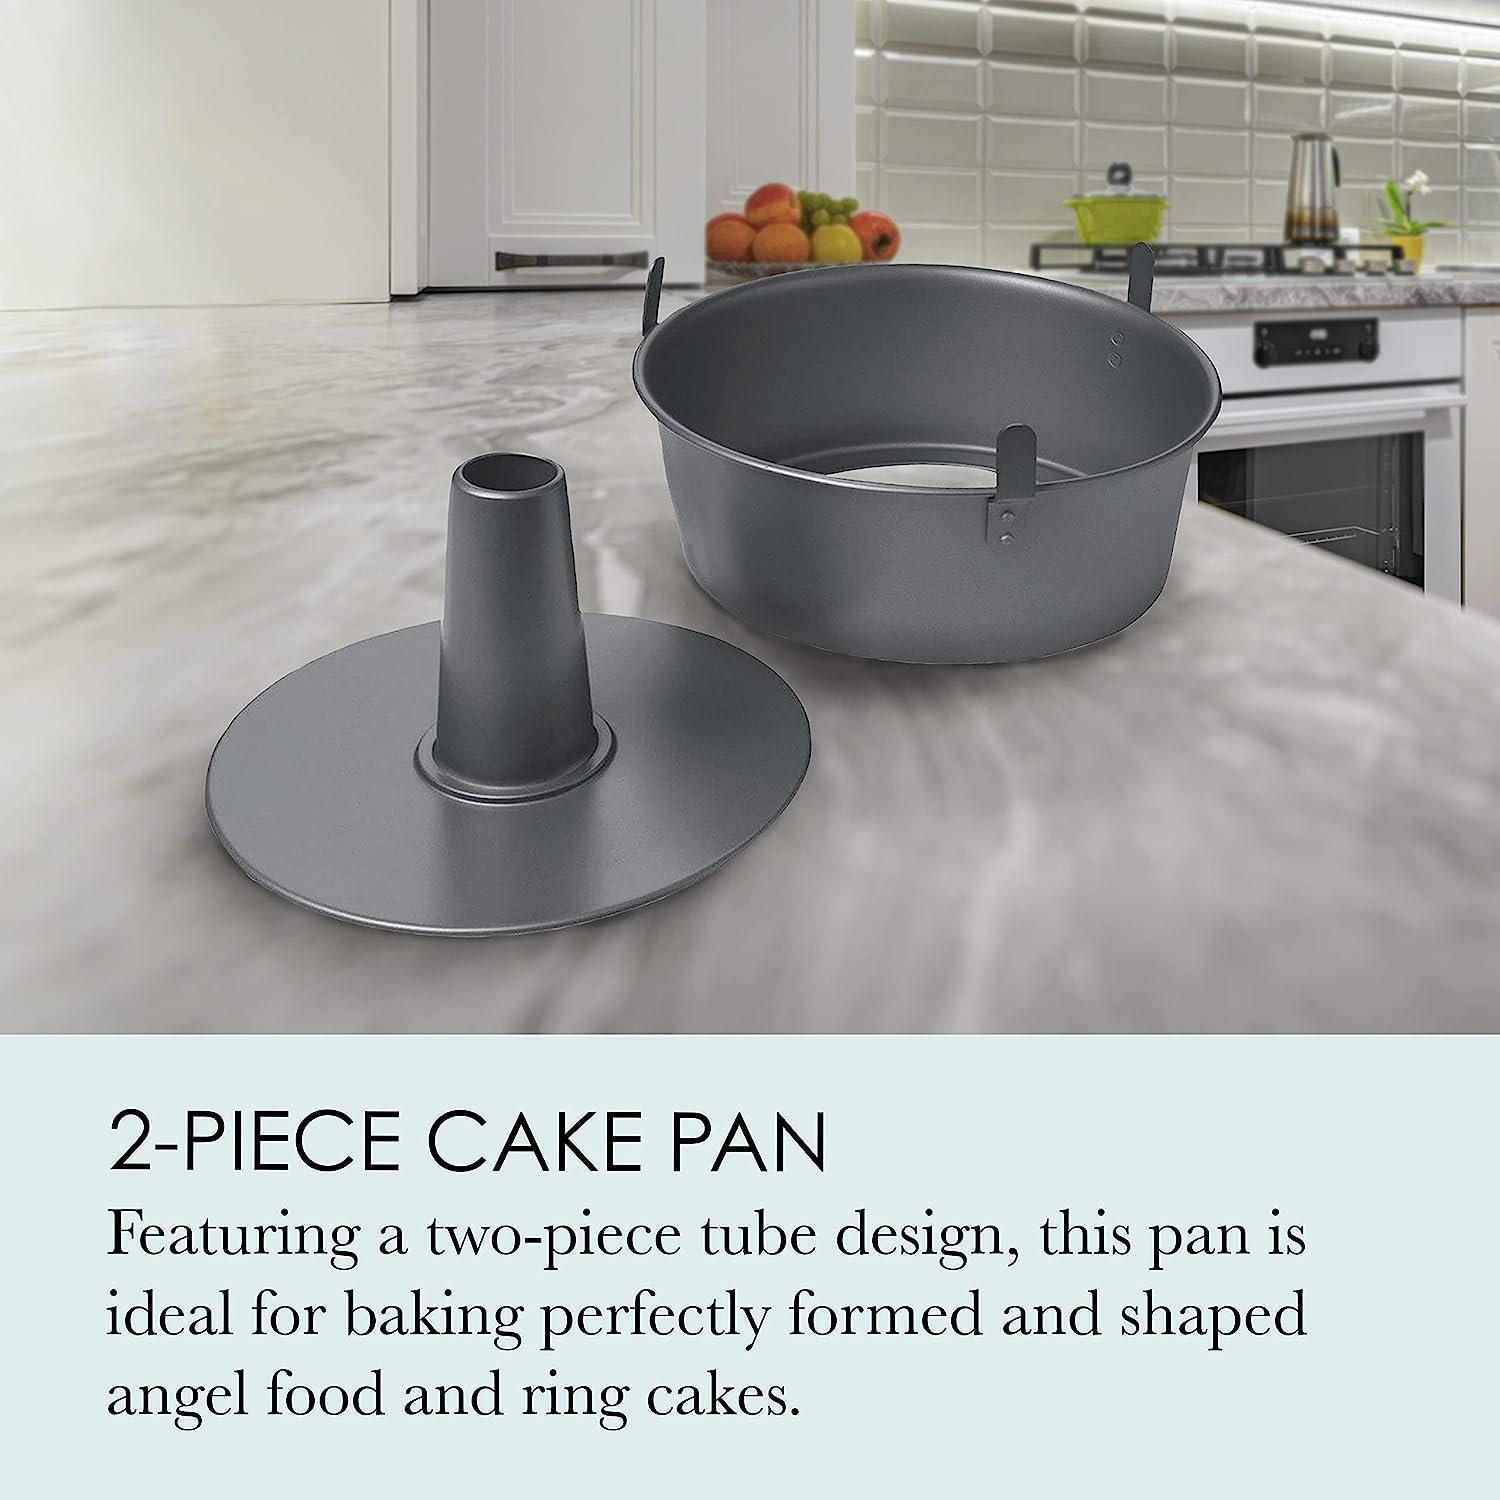 Buy Chicago Metallic 5233128 Professional Non-Stick 3-Piece Round Cake Pan  Bakeware Set, Black Online at Low Prices in India - Amazon.in